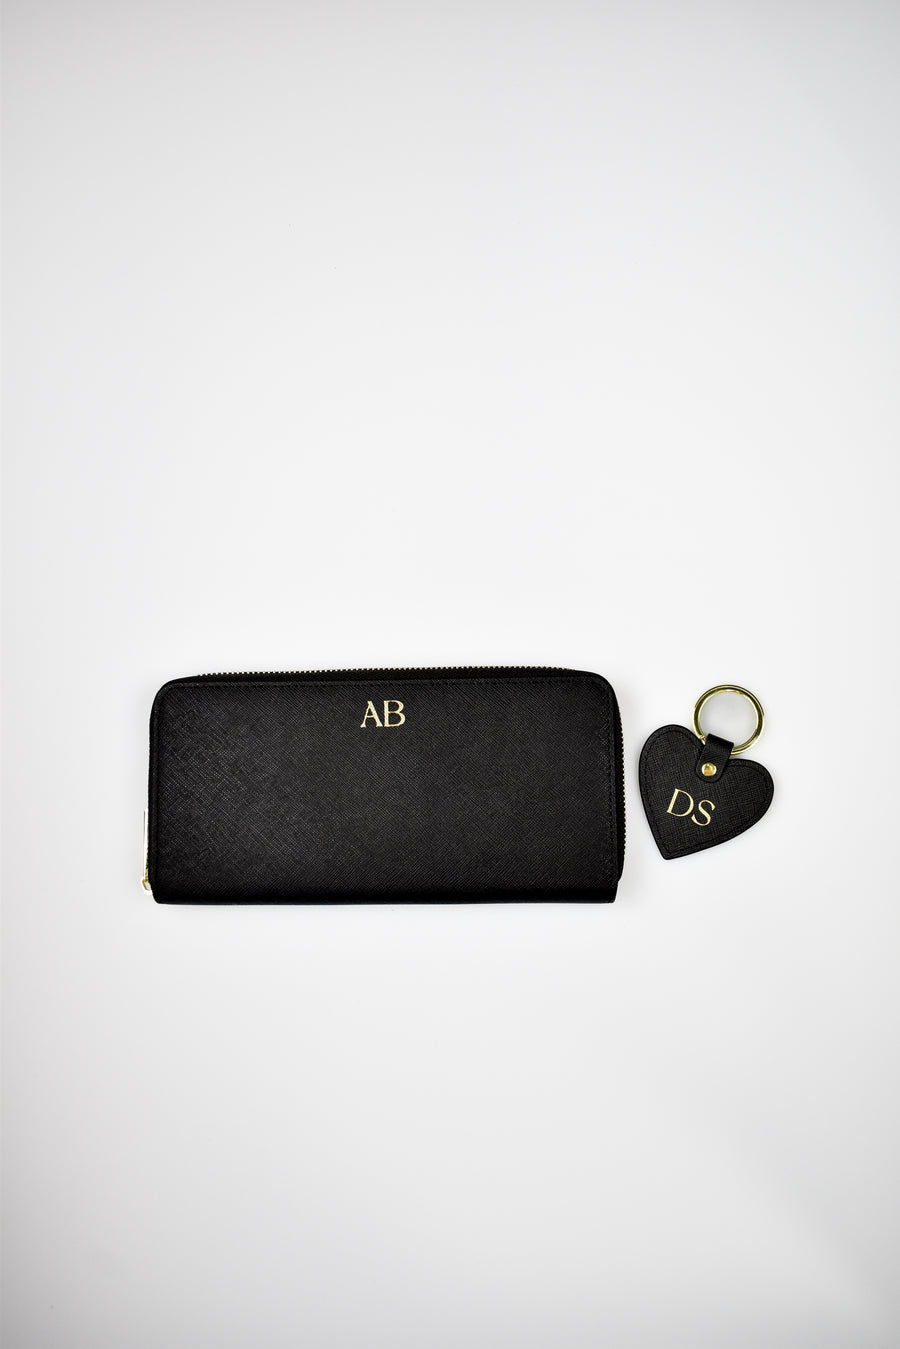 Saffiano leather wallet & heart keyring bundle - The Best Kind